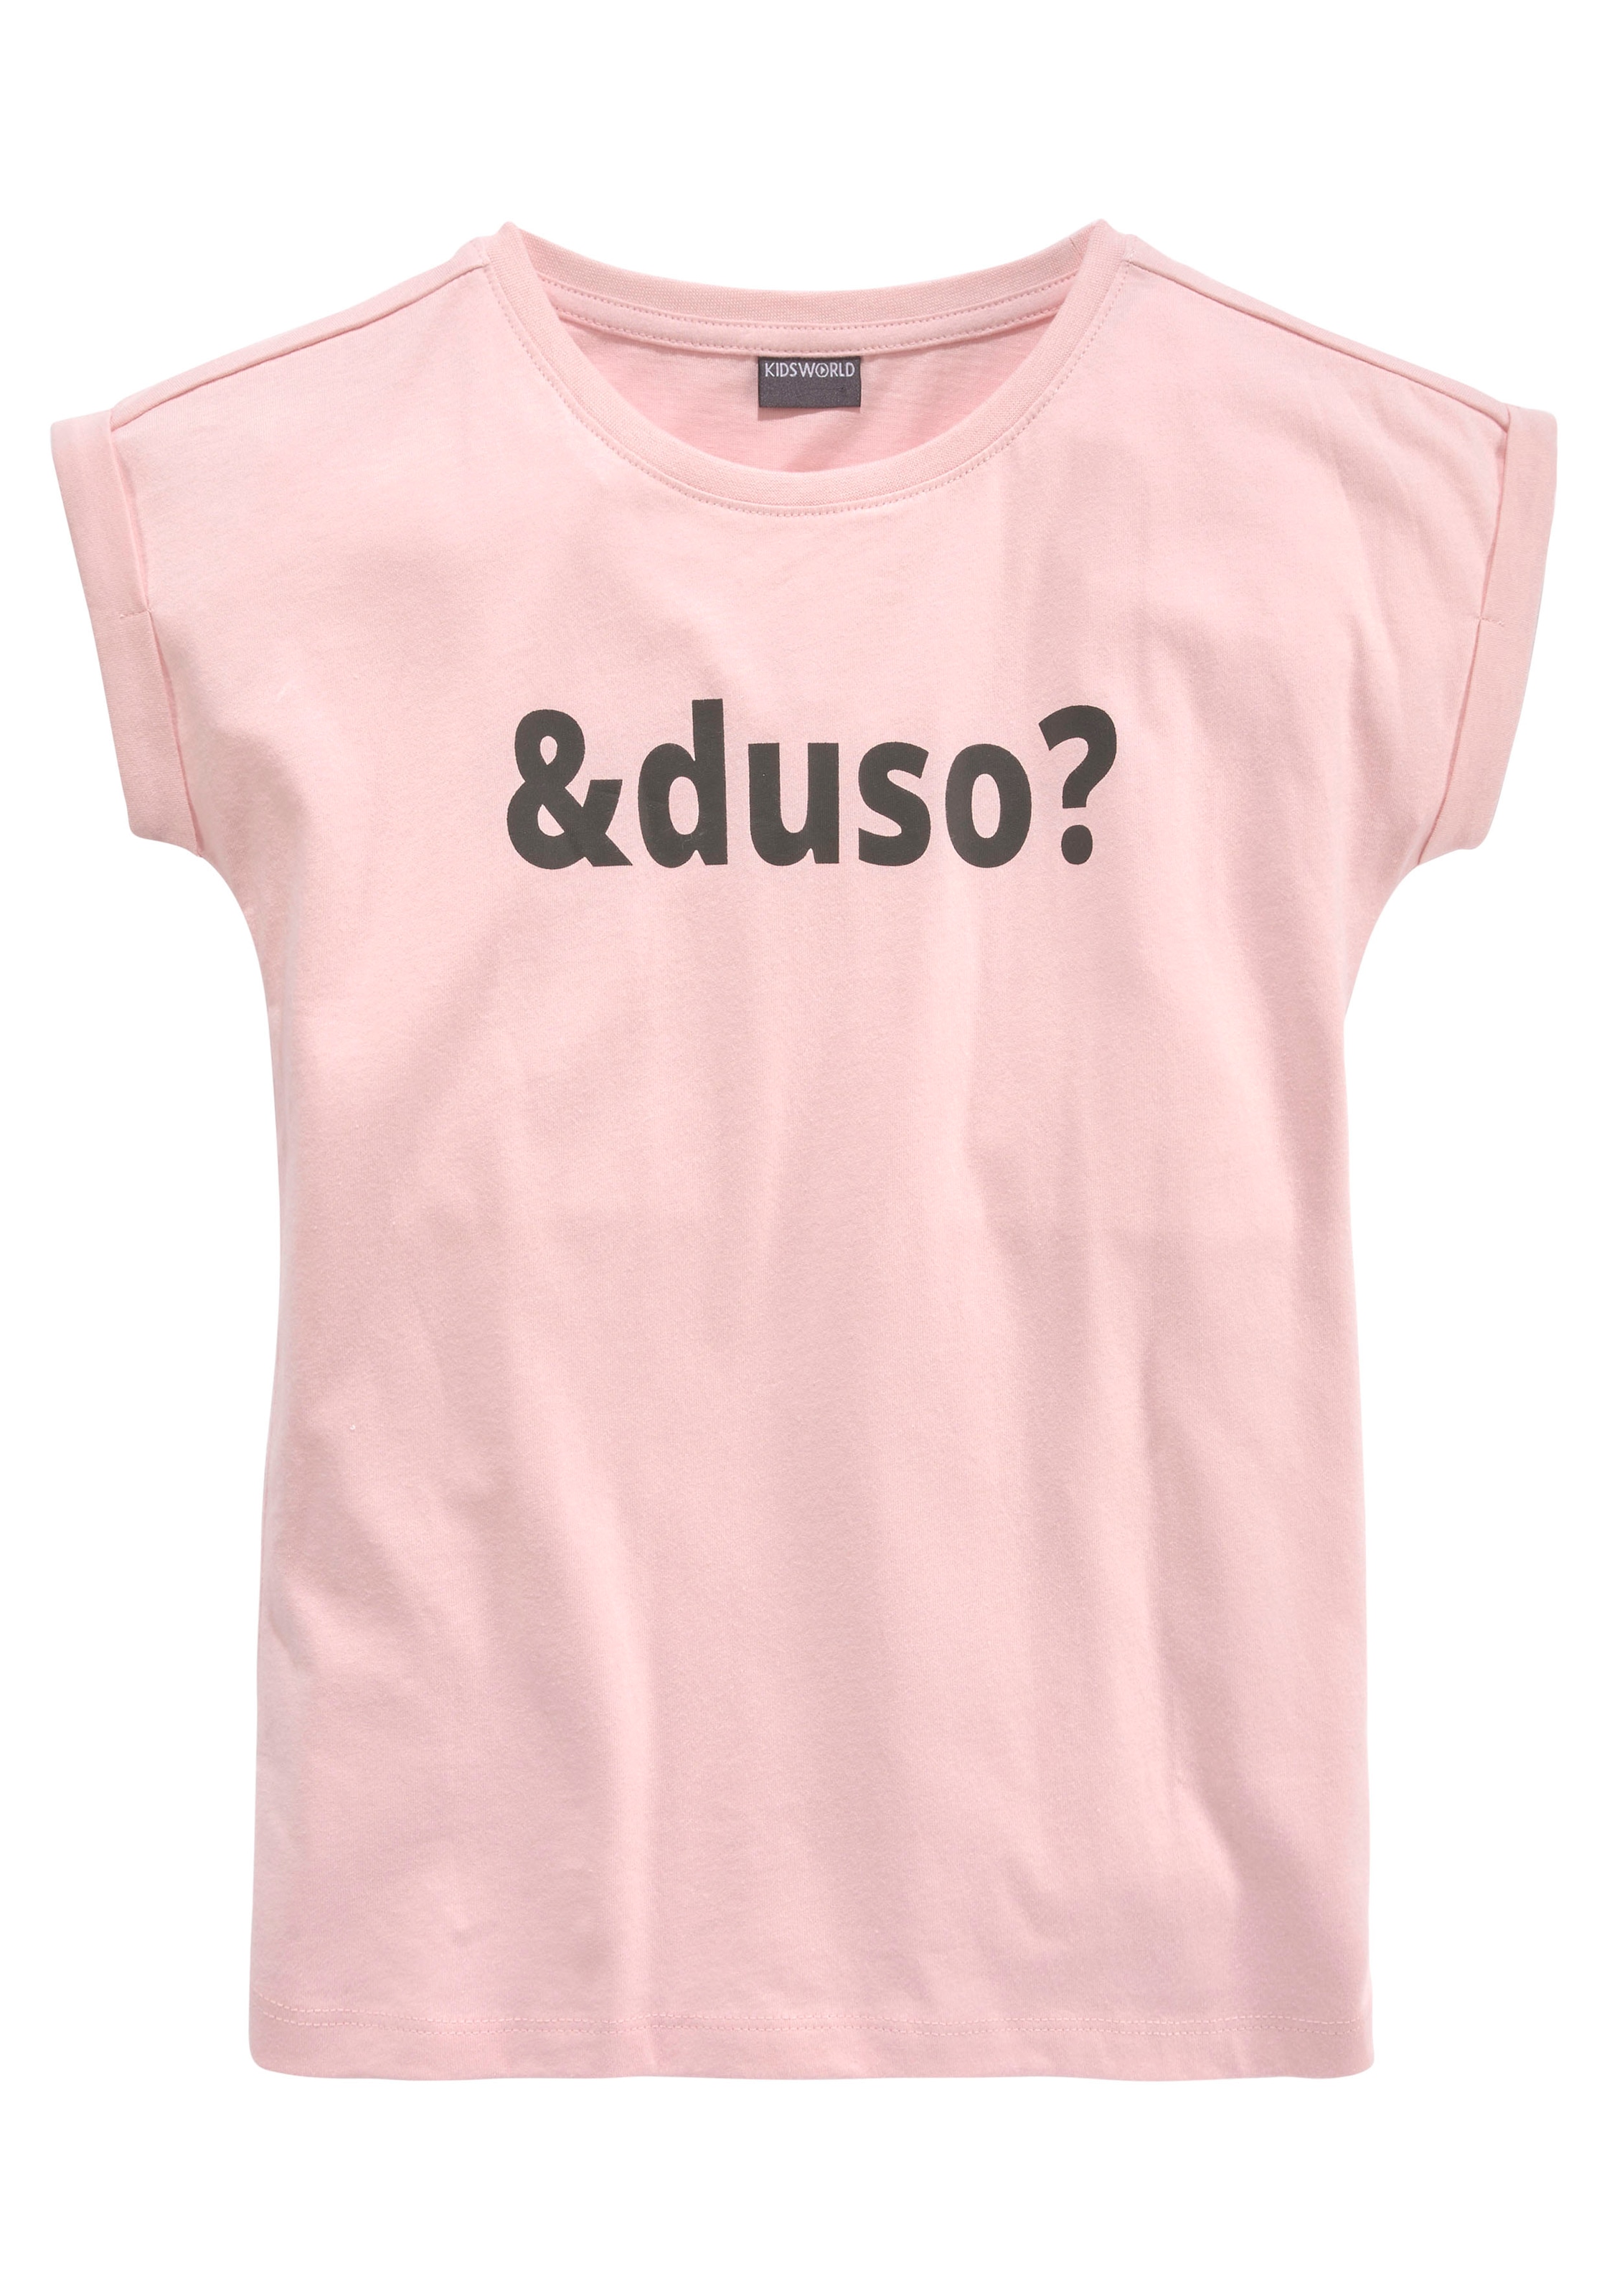 KIDSWORLD T-Shirt »&duso?«, in bequemer Passform